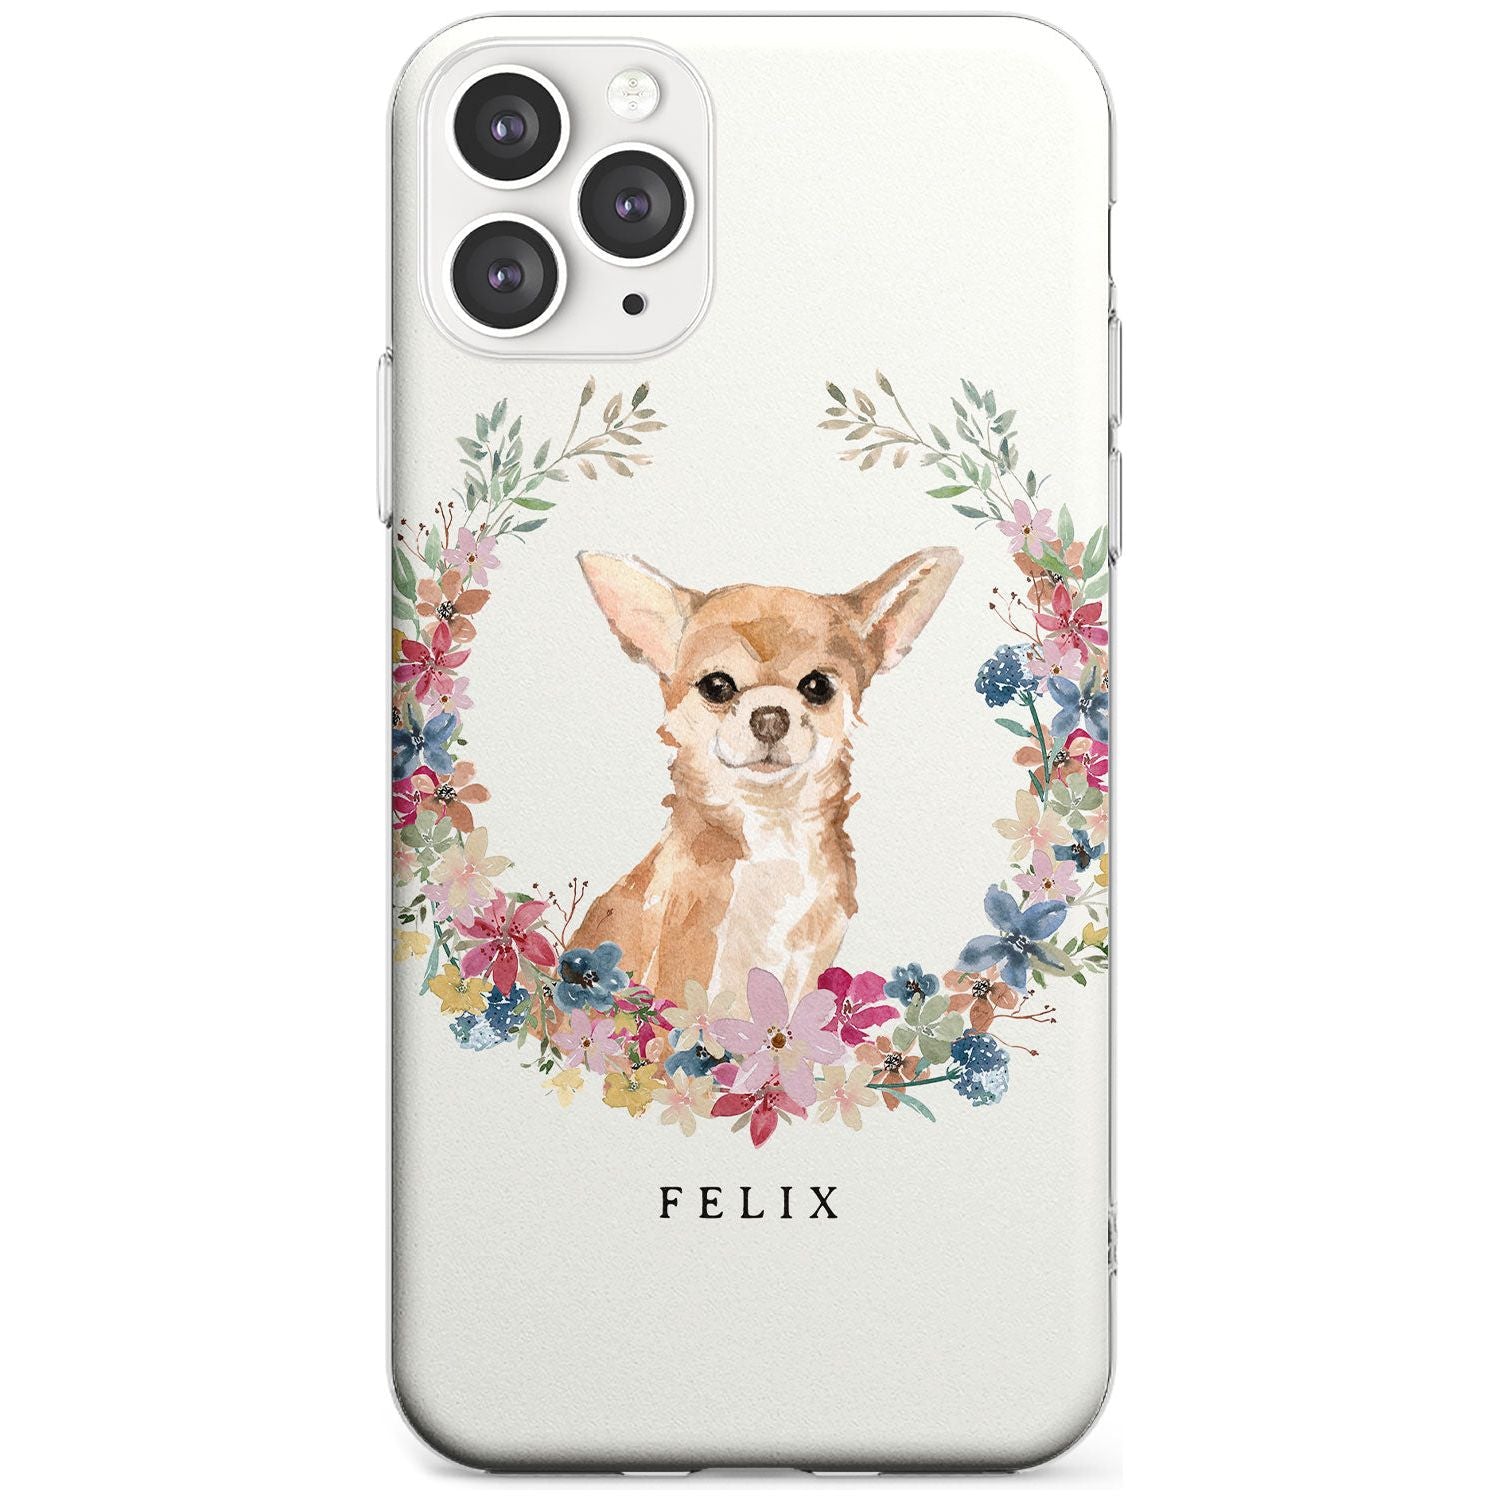 Chihuahua - Watercolour Dog Portrait Slim TPU Phone Case for iPhone 11 Pro Max